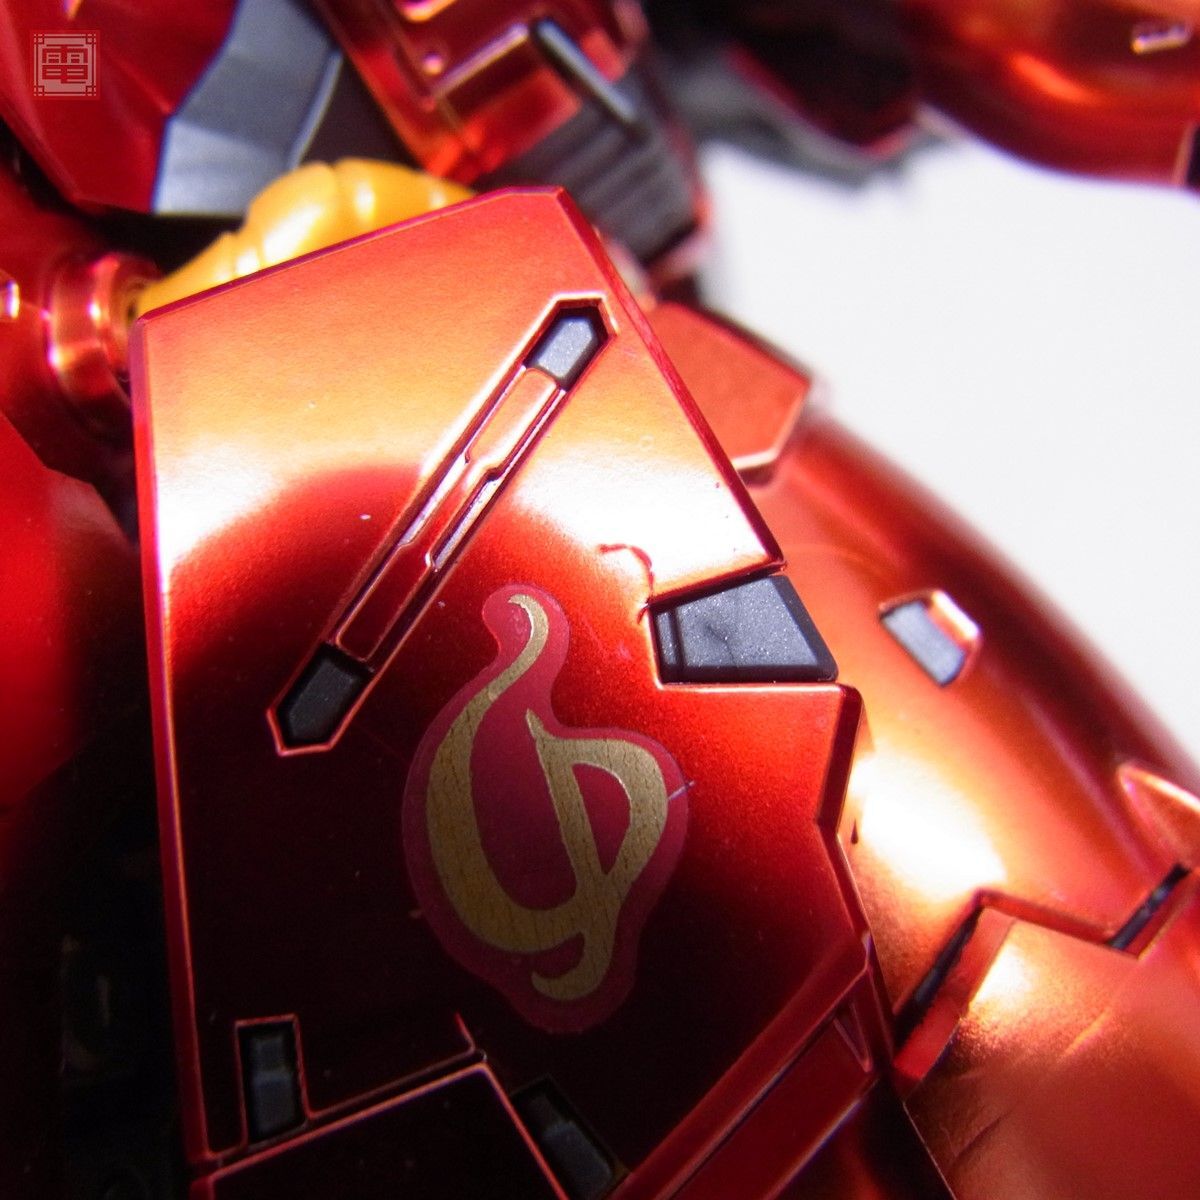  сборка settled Bandai RG 1/144 Sazaby специальный покрытие Mobile Suit Gundam Char's Counterattack BANDAI gun pra текущее состояние товар [20